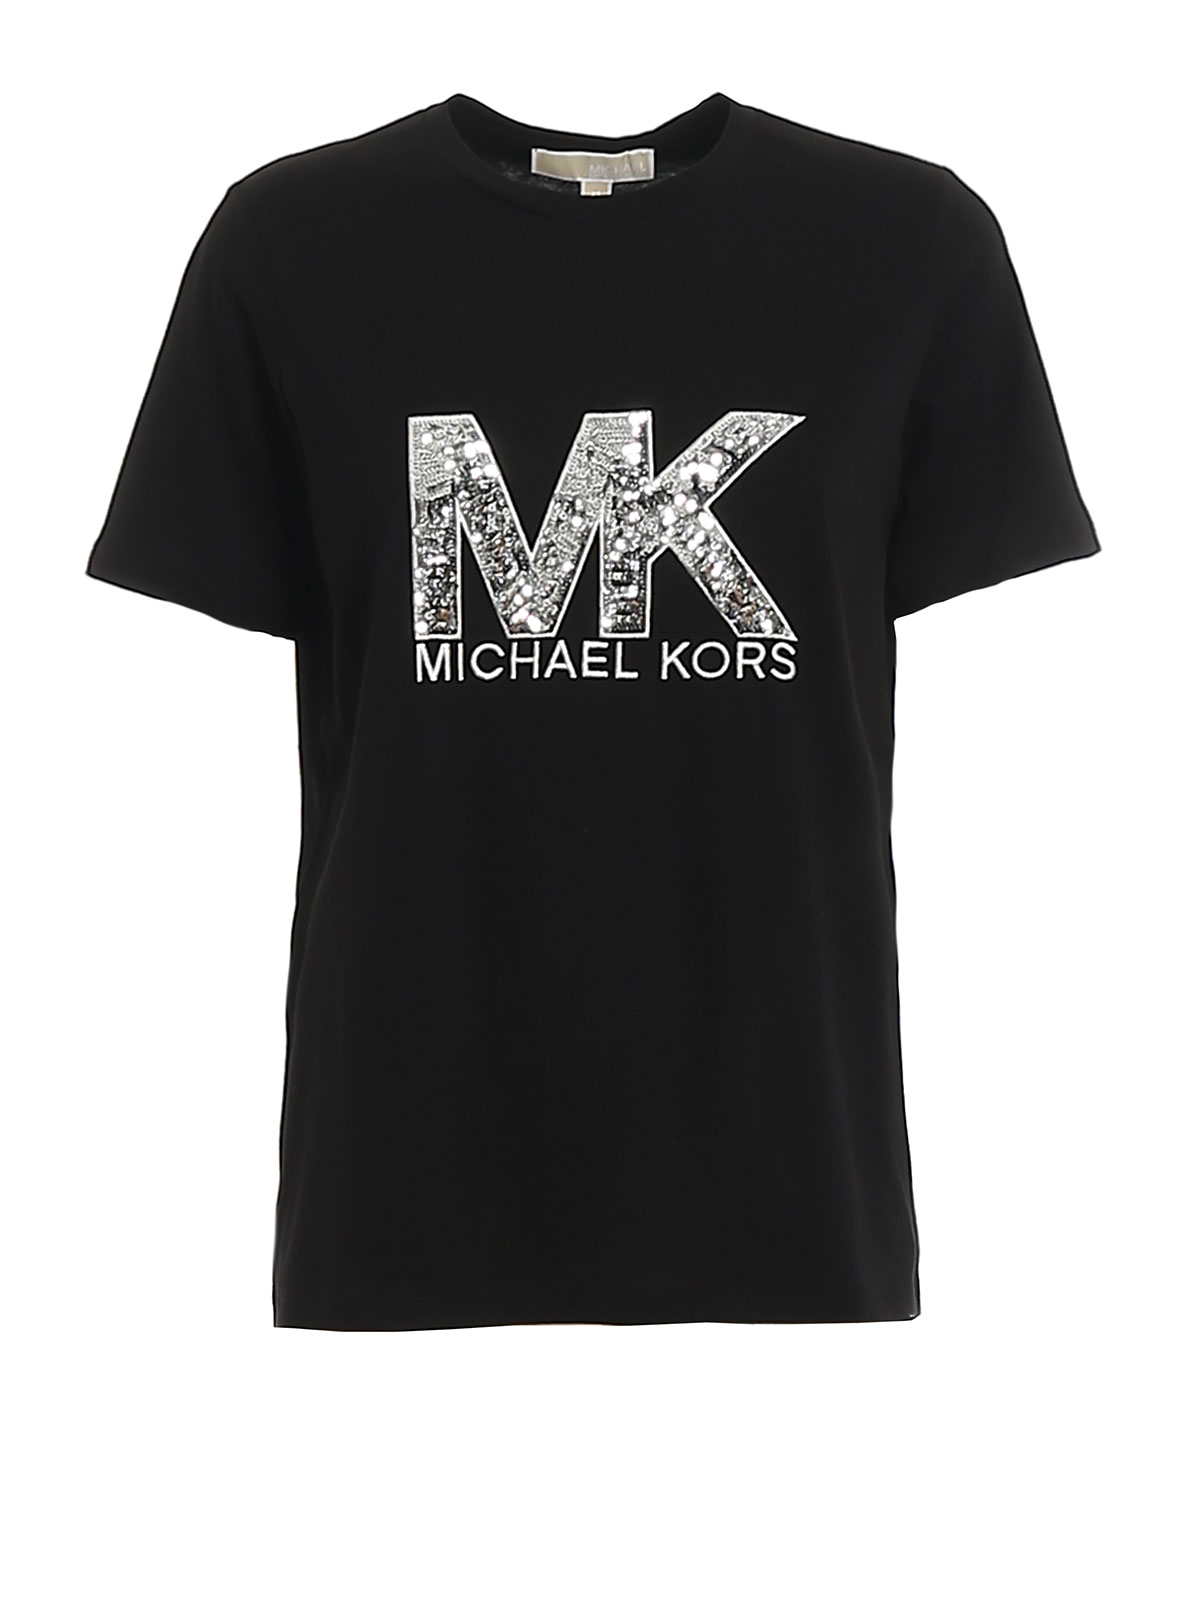 Tee Shirt Michael Kors | macromundo.cl